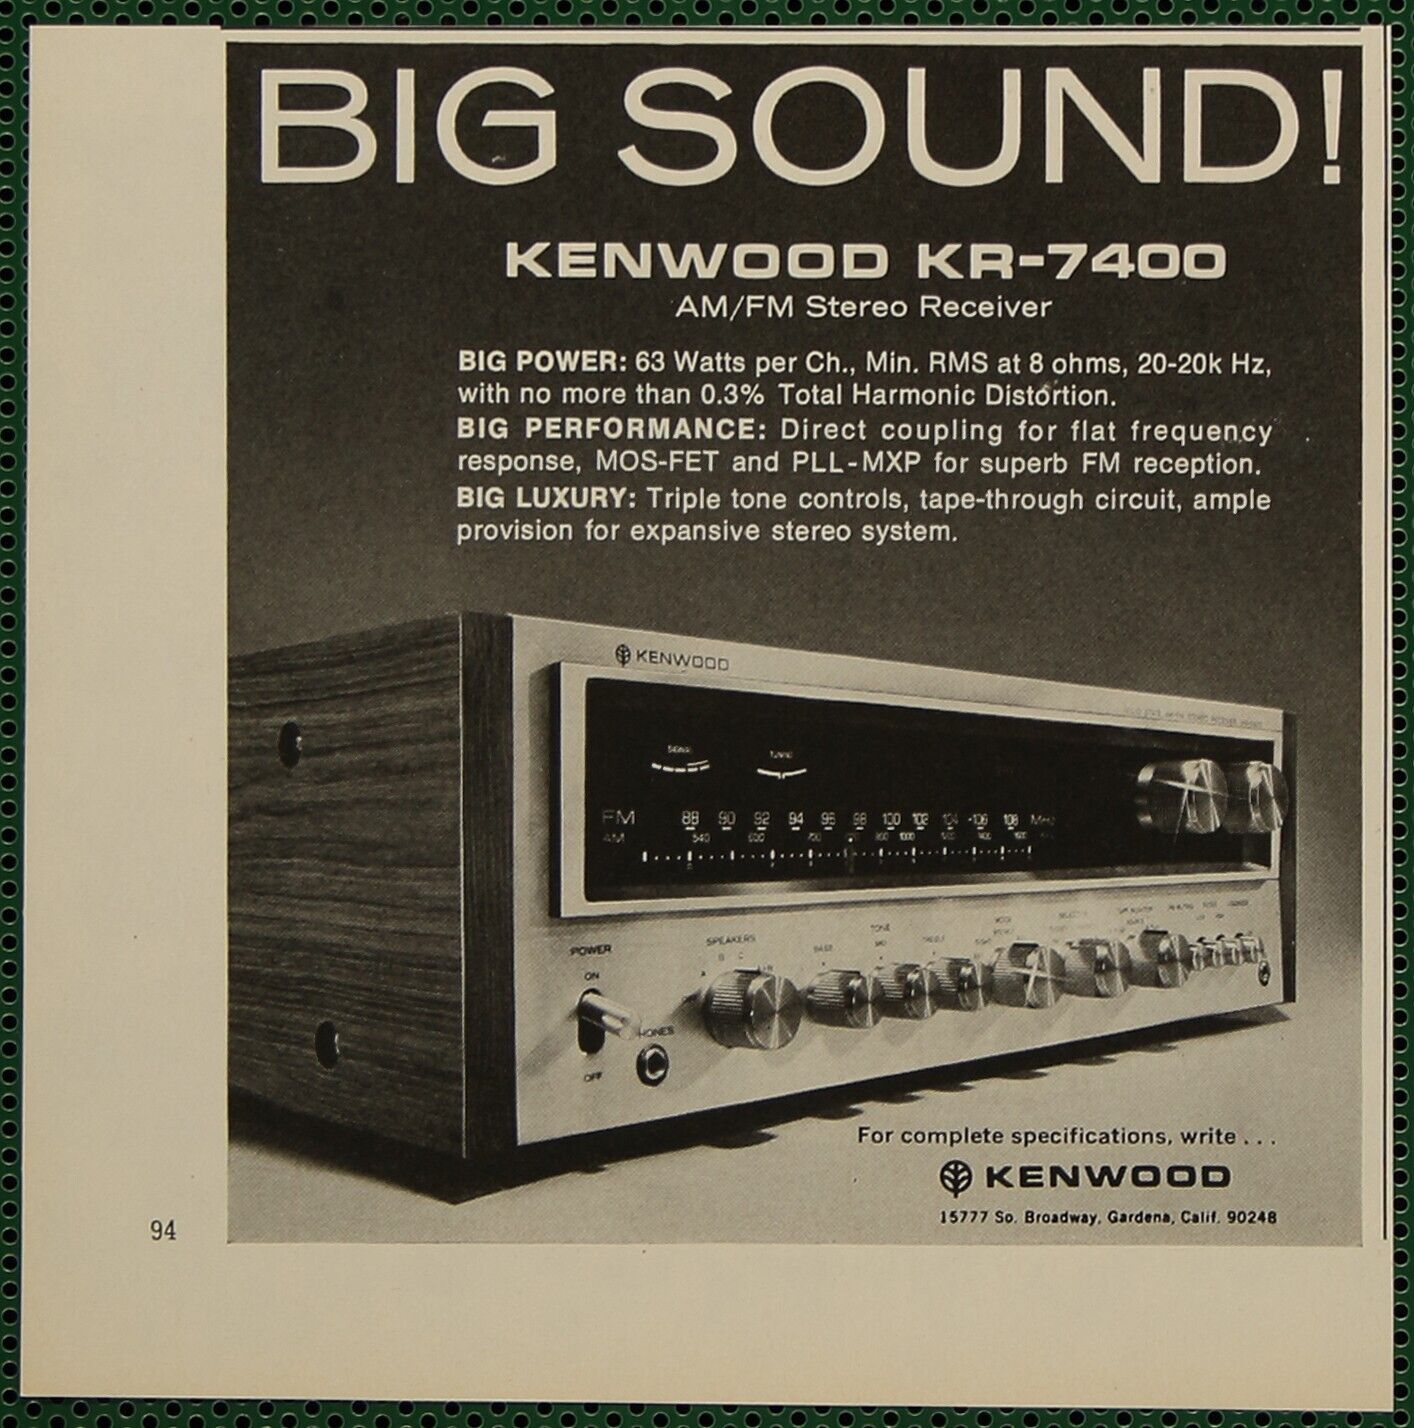 Kenwood KR-7400 63 Watt Big Sound Stereo Receiver Vintage Print Ad 1974